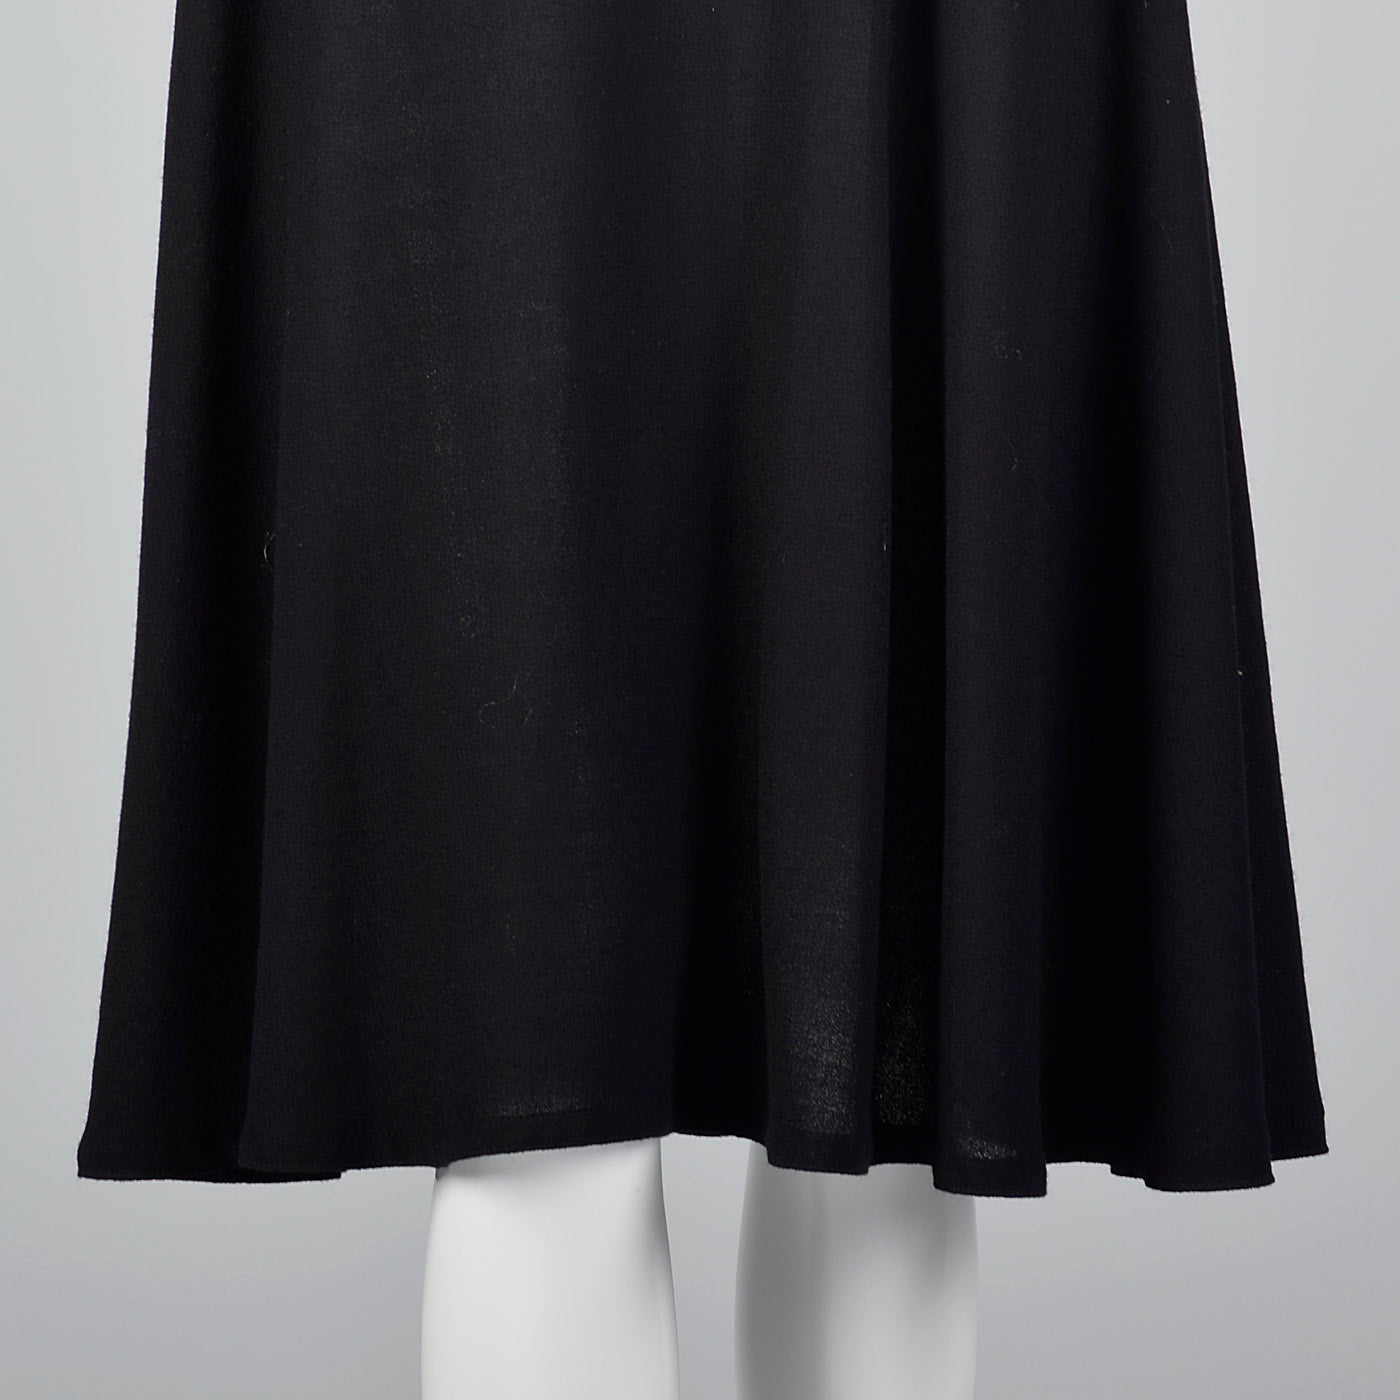 1970s Adele Simpson Black Wool Dress with Drop Waist